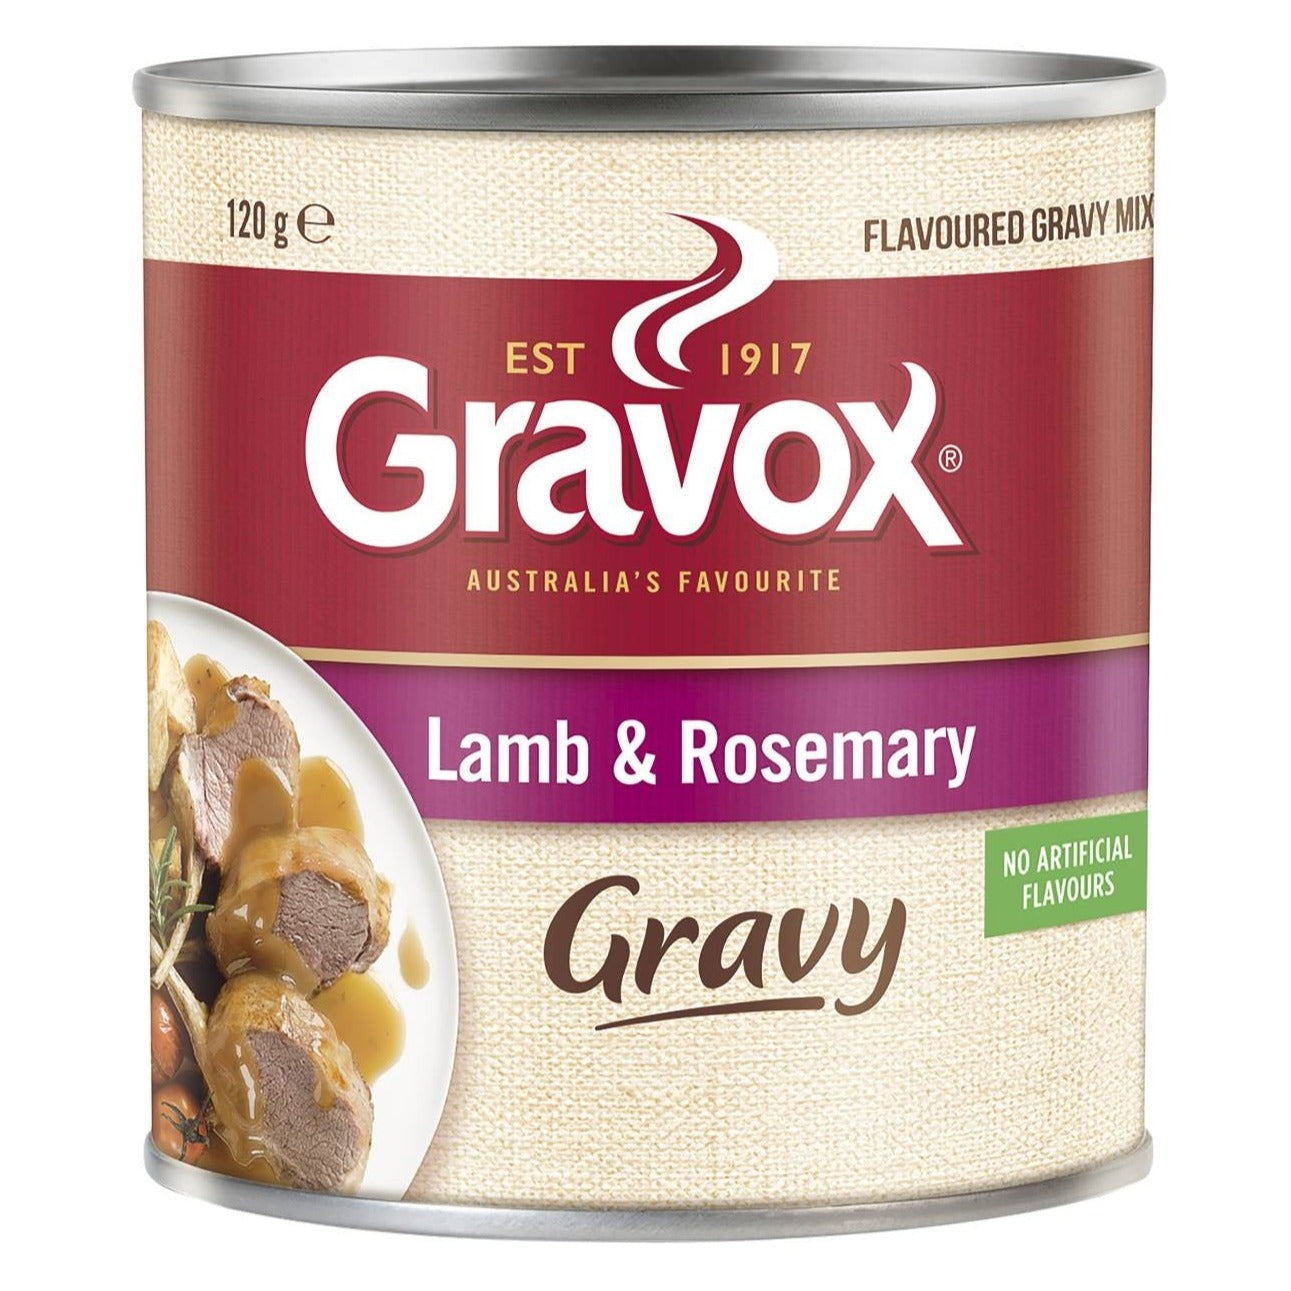 Gravox Gravy, 120g Can, Lamb and Rosemary